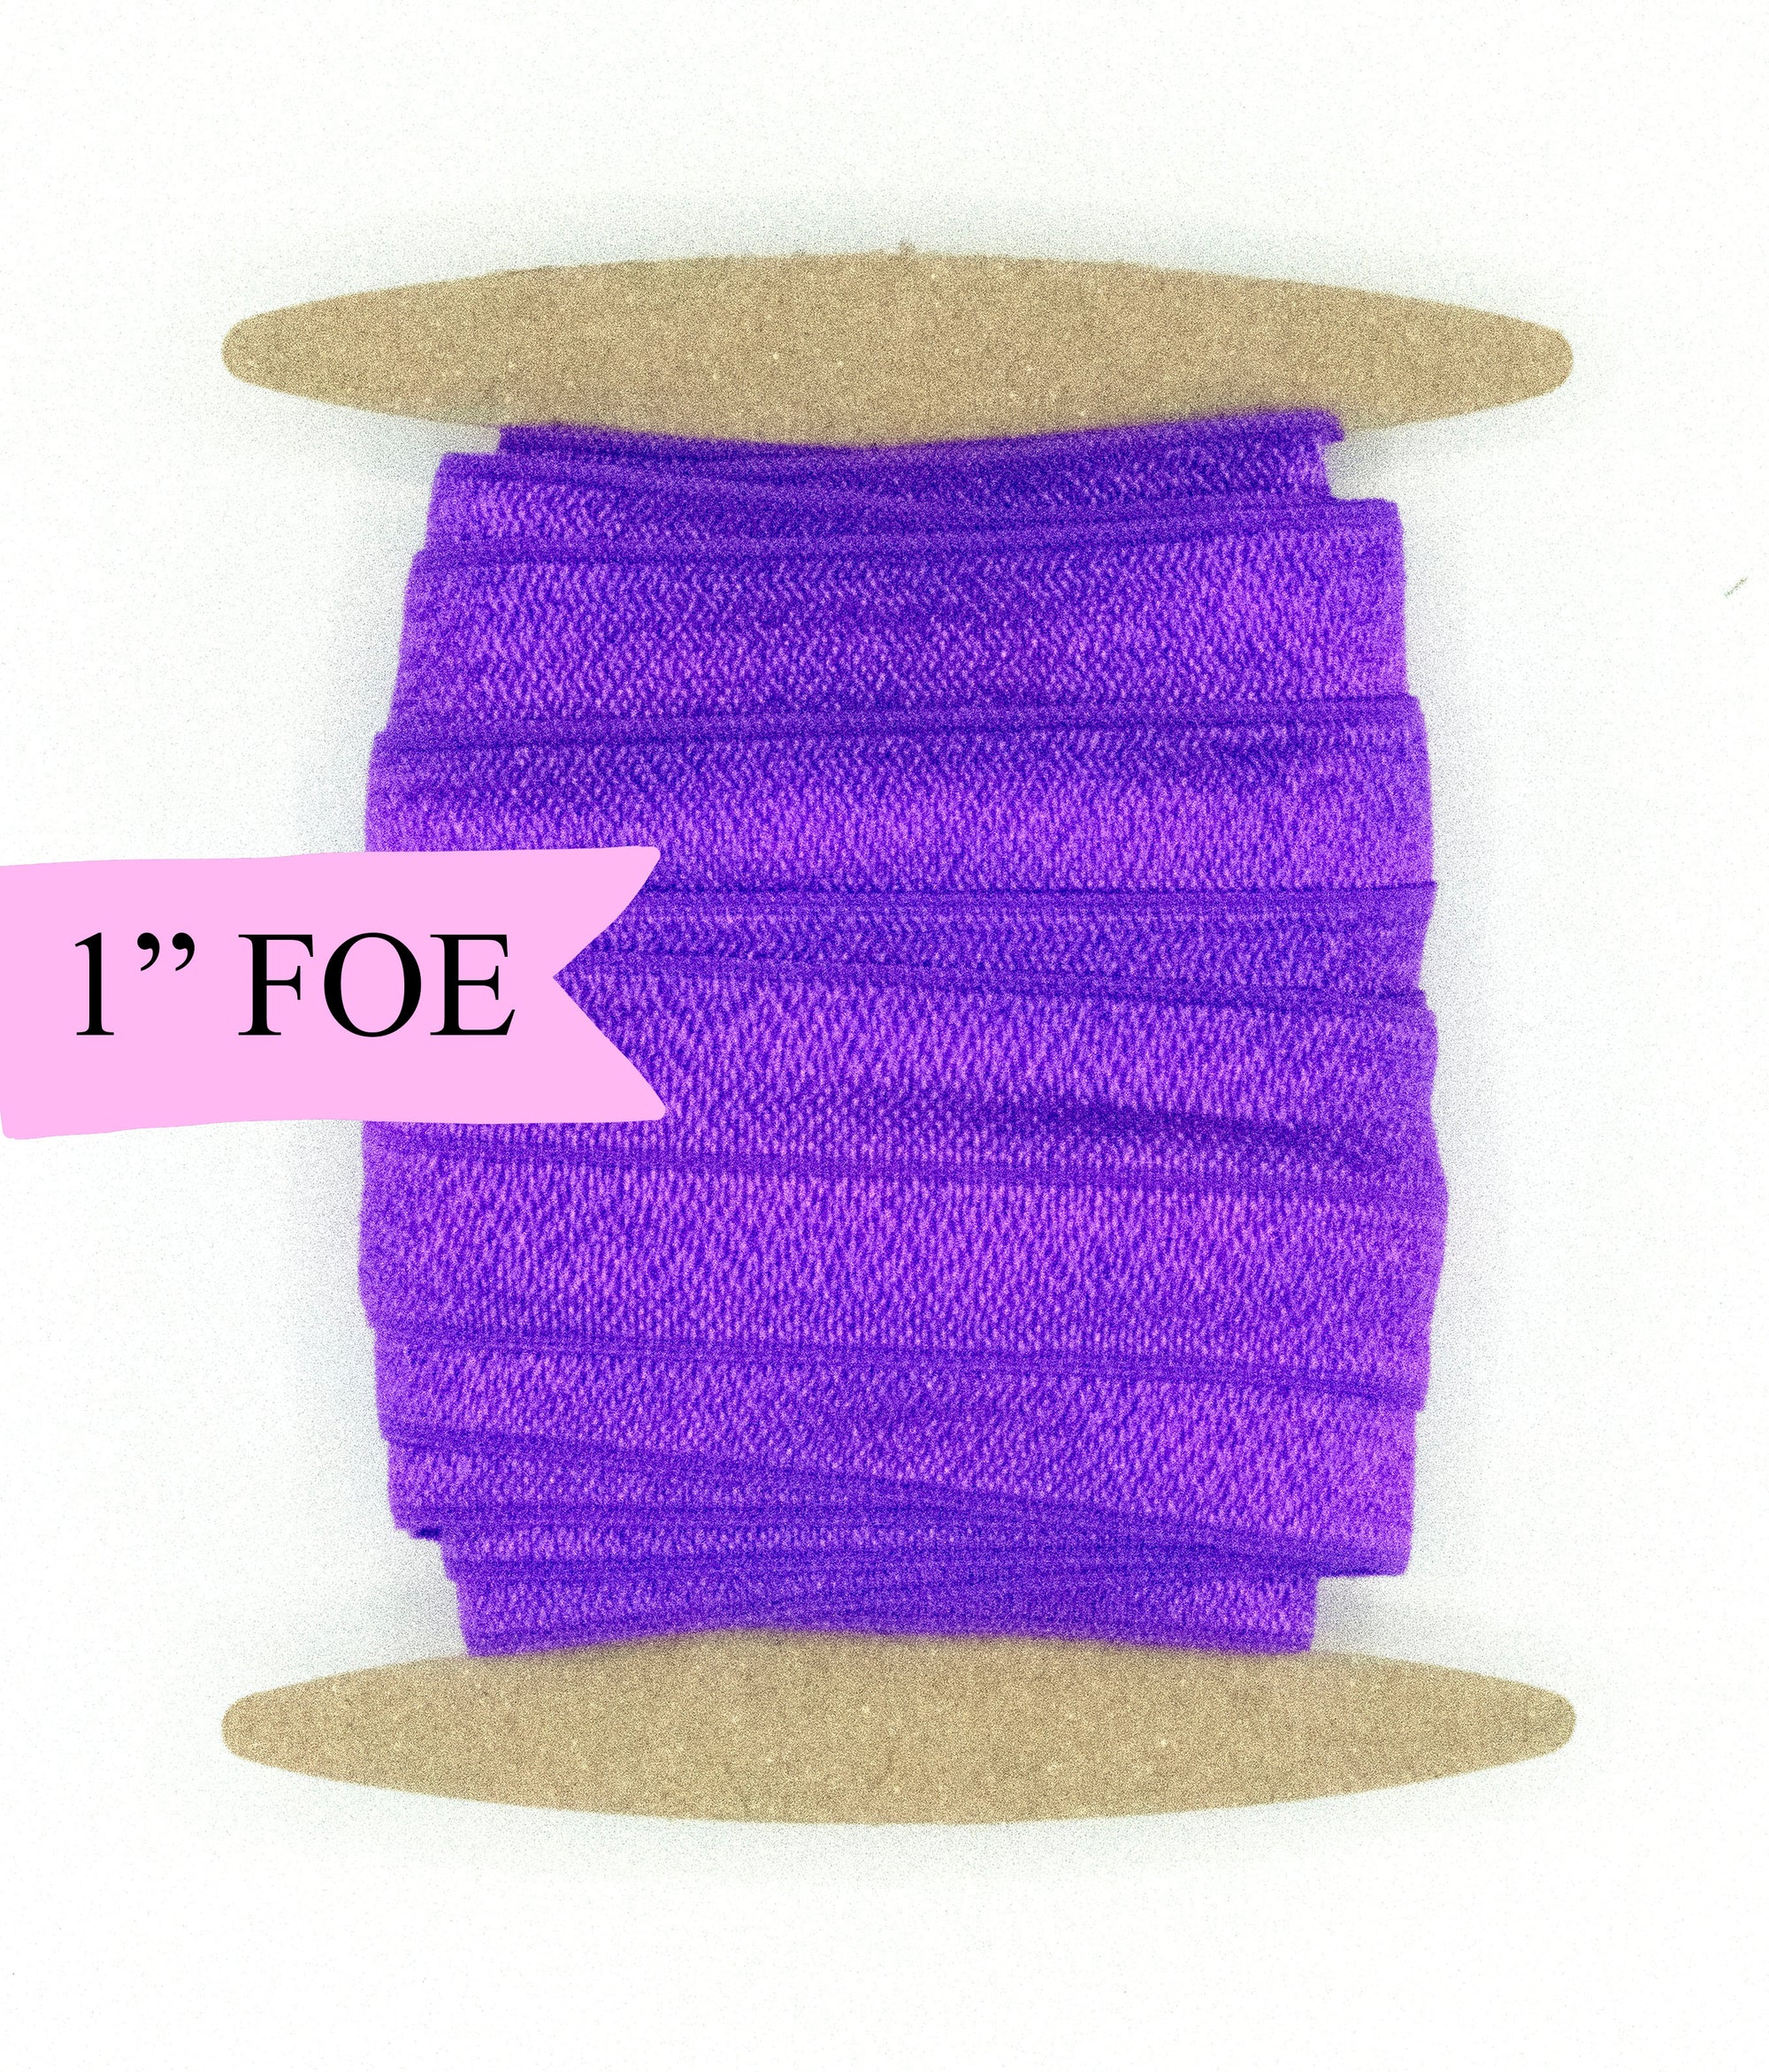 1 inch elastic fold over, #155 geranium pink elastic ribbons in